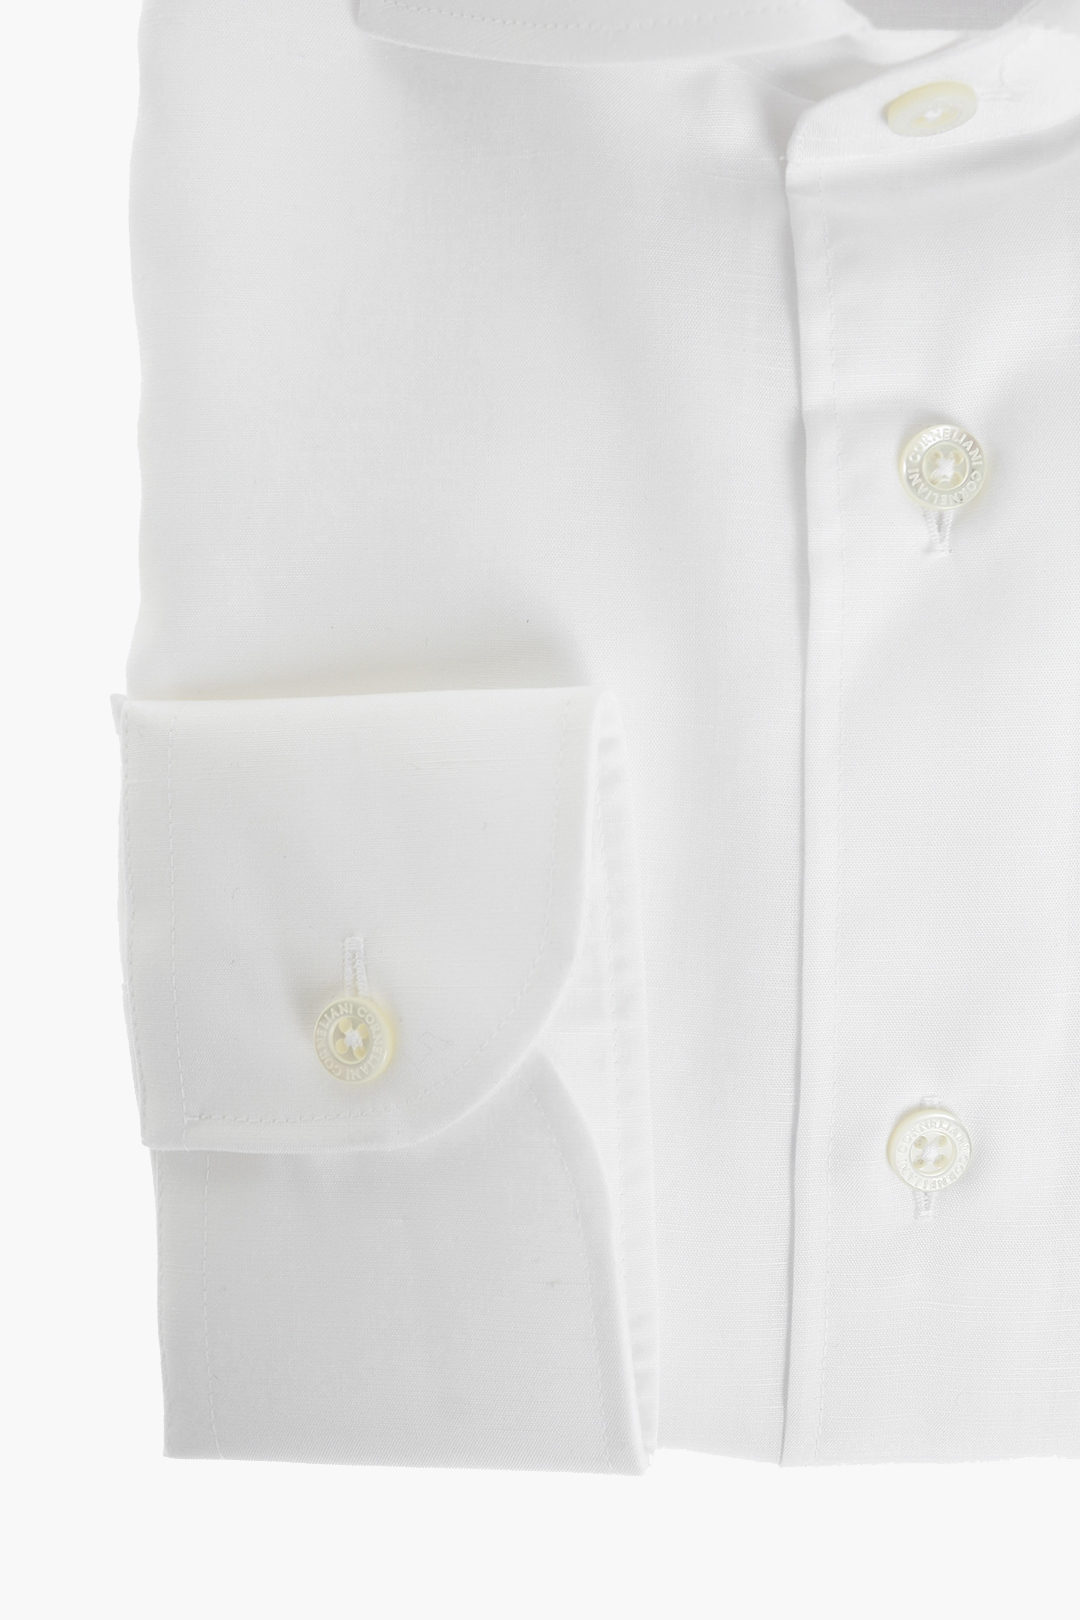 Corneliani solid color spread collar shirt men - Glamood Outlet